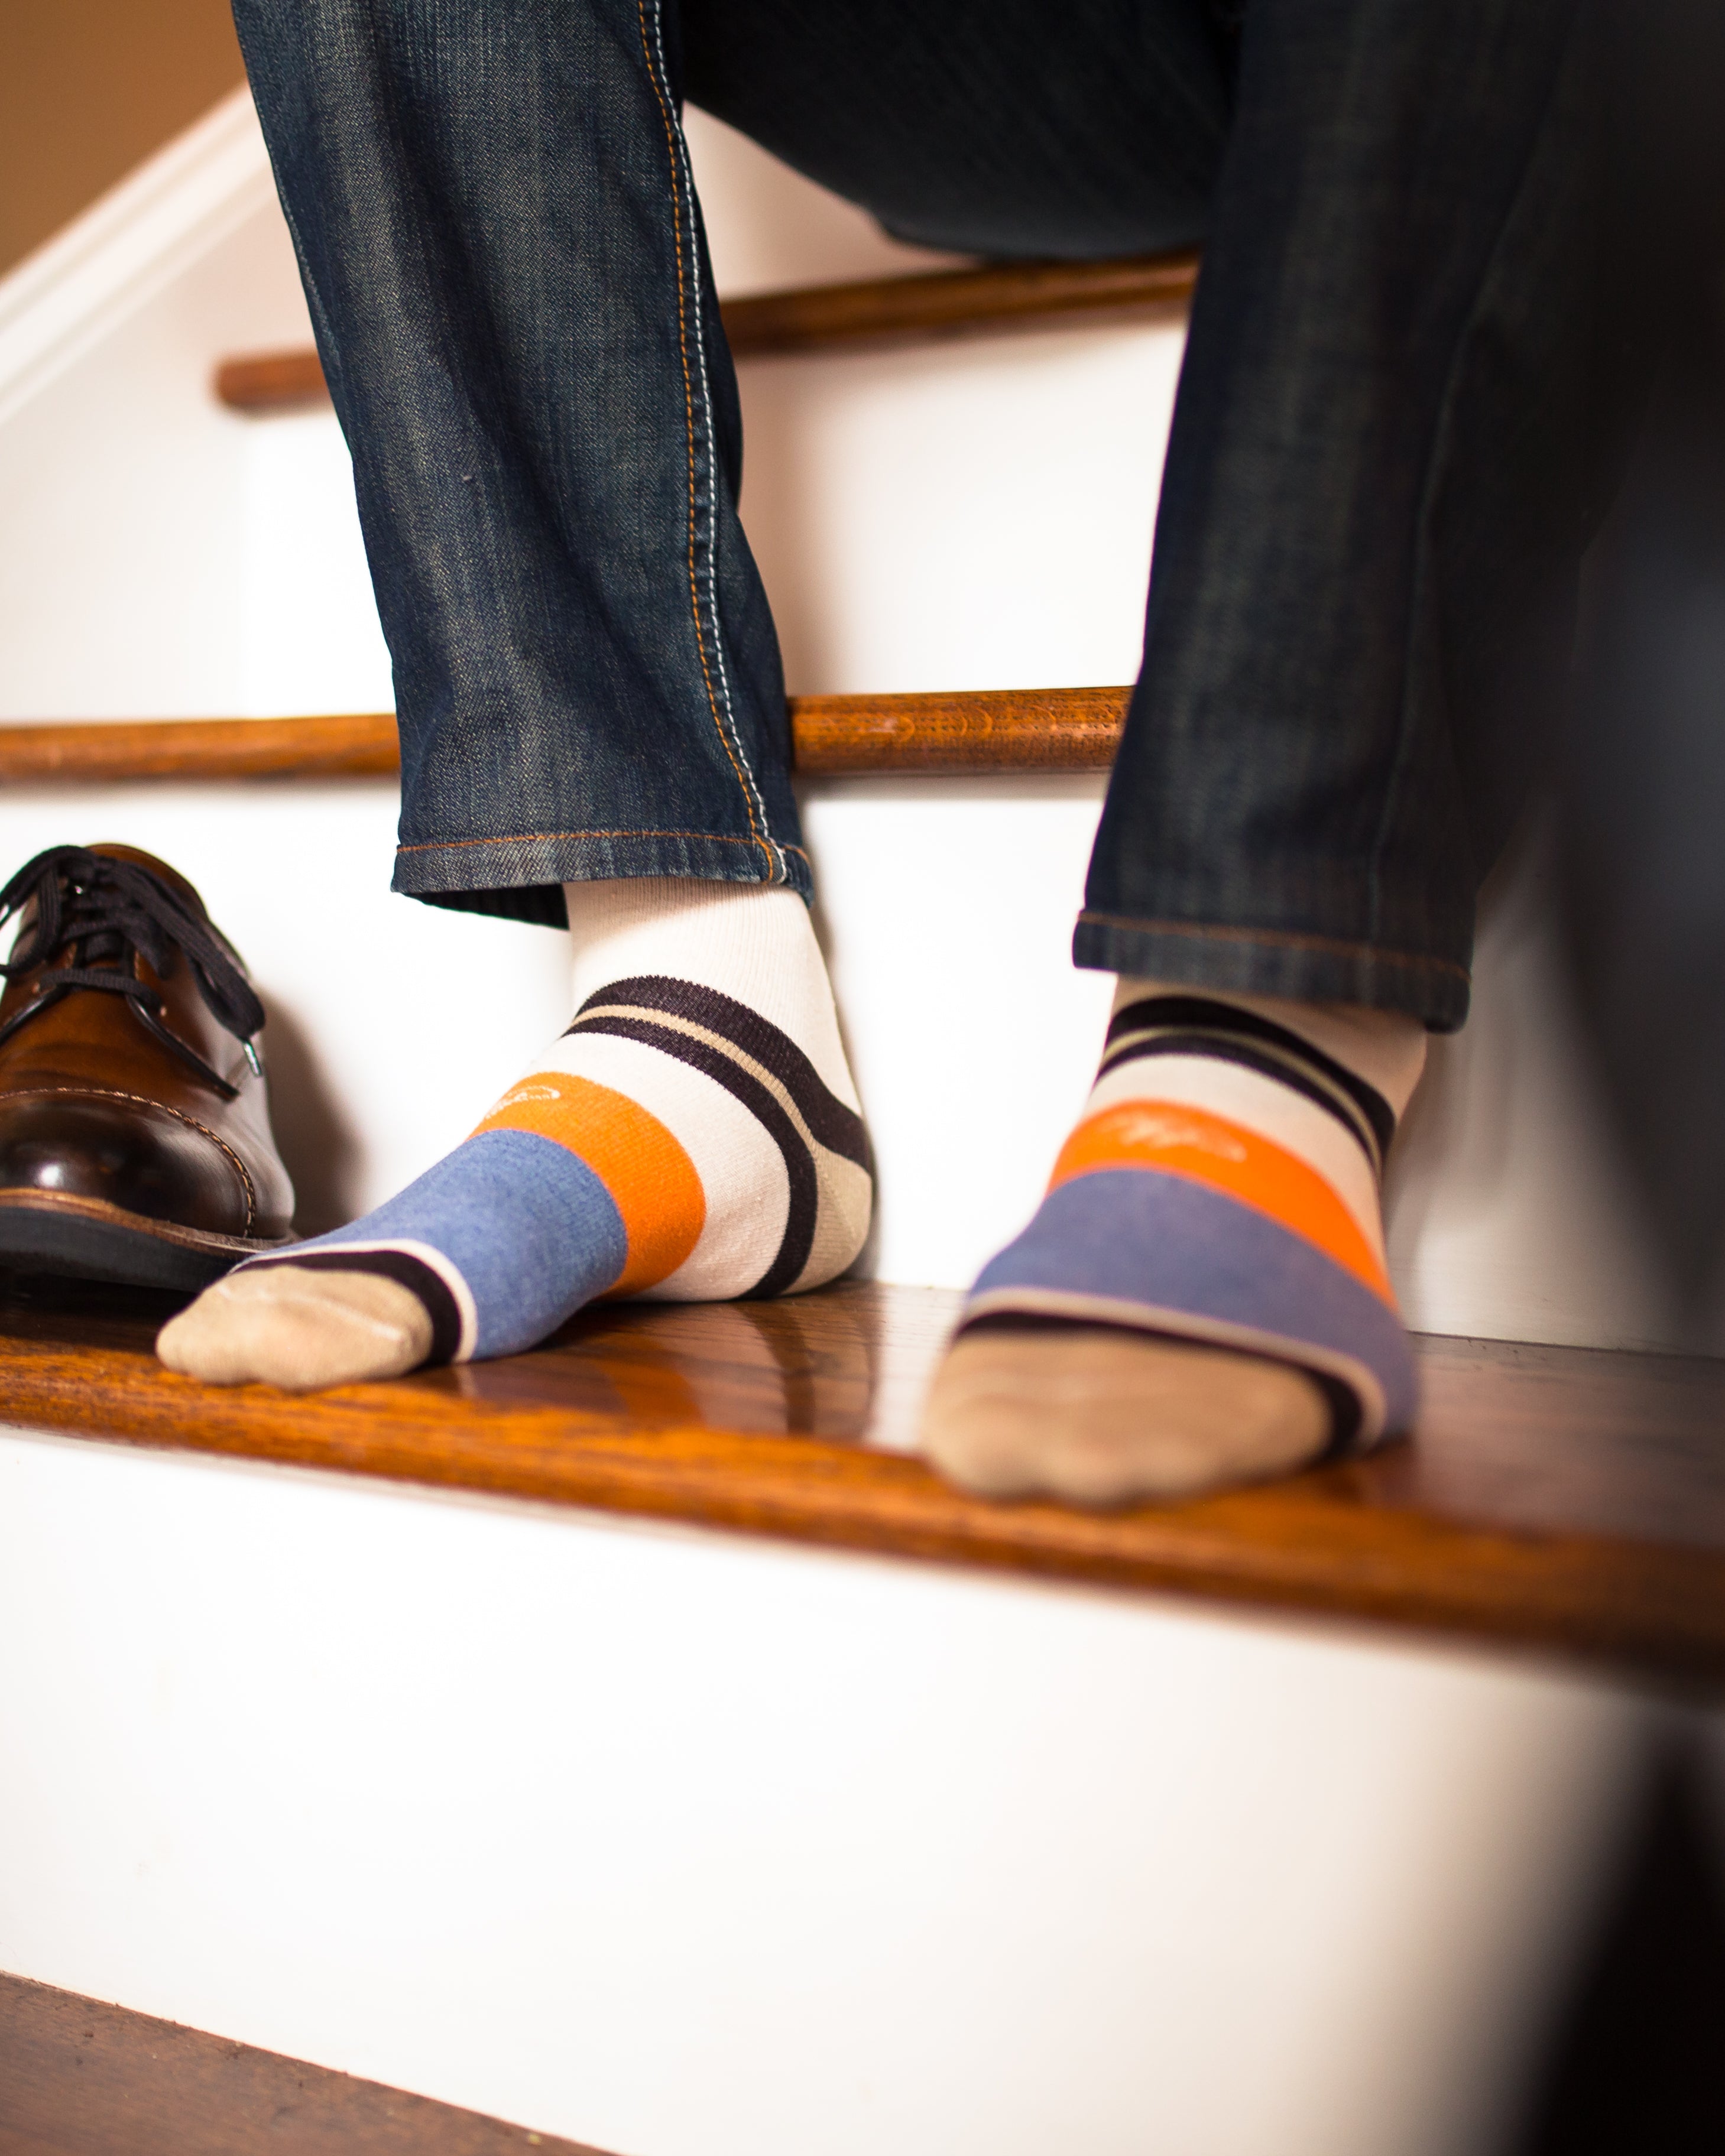 beige over the calf dress socks with orange and light blue stripes, blue jeans, brown dress shoe